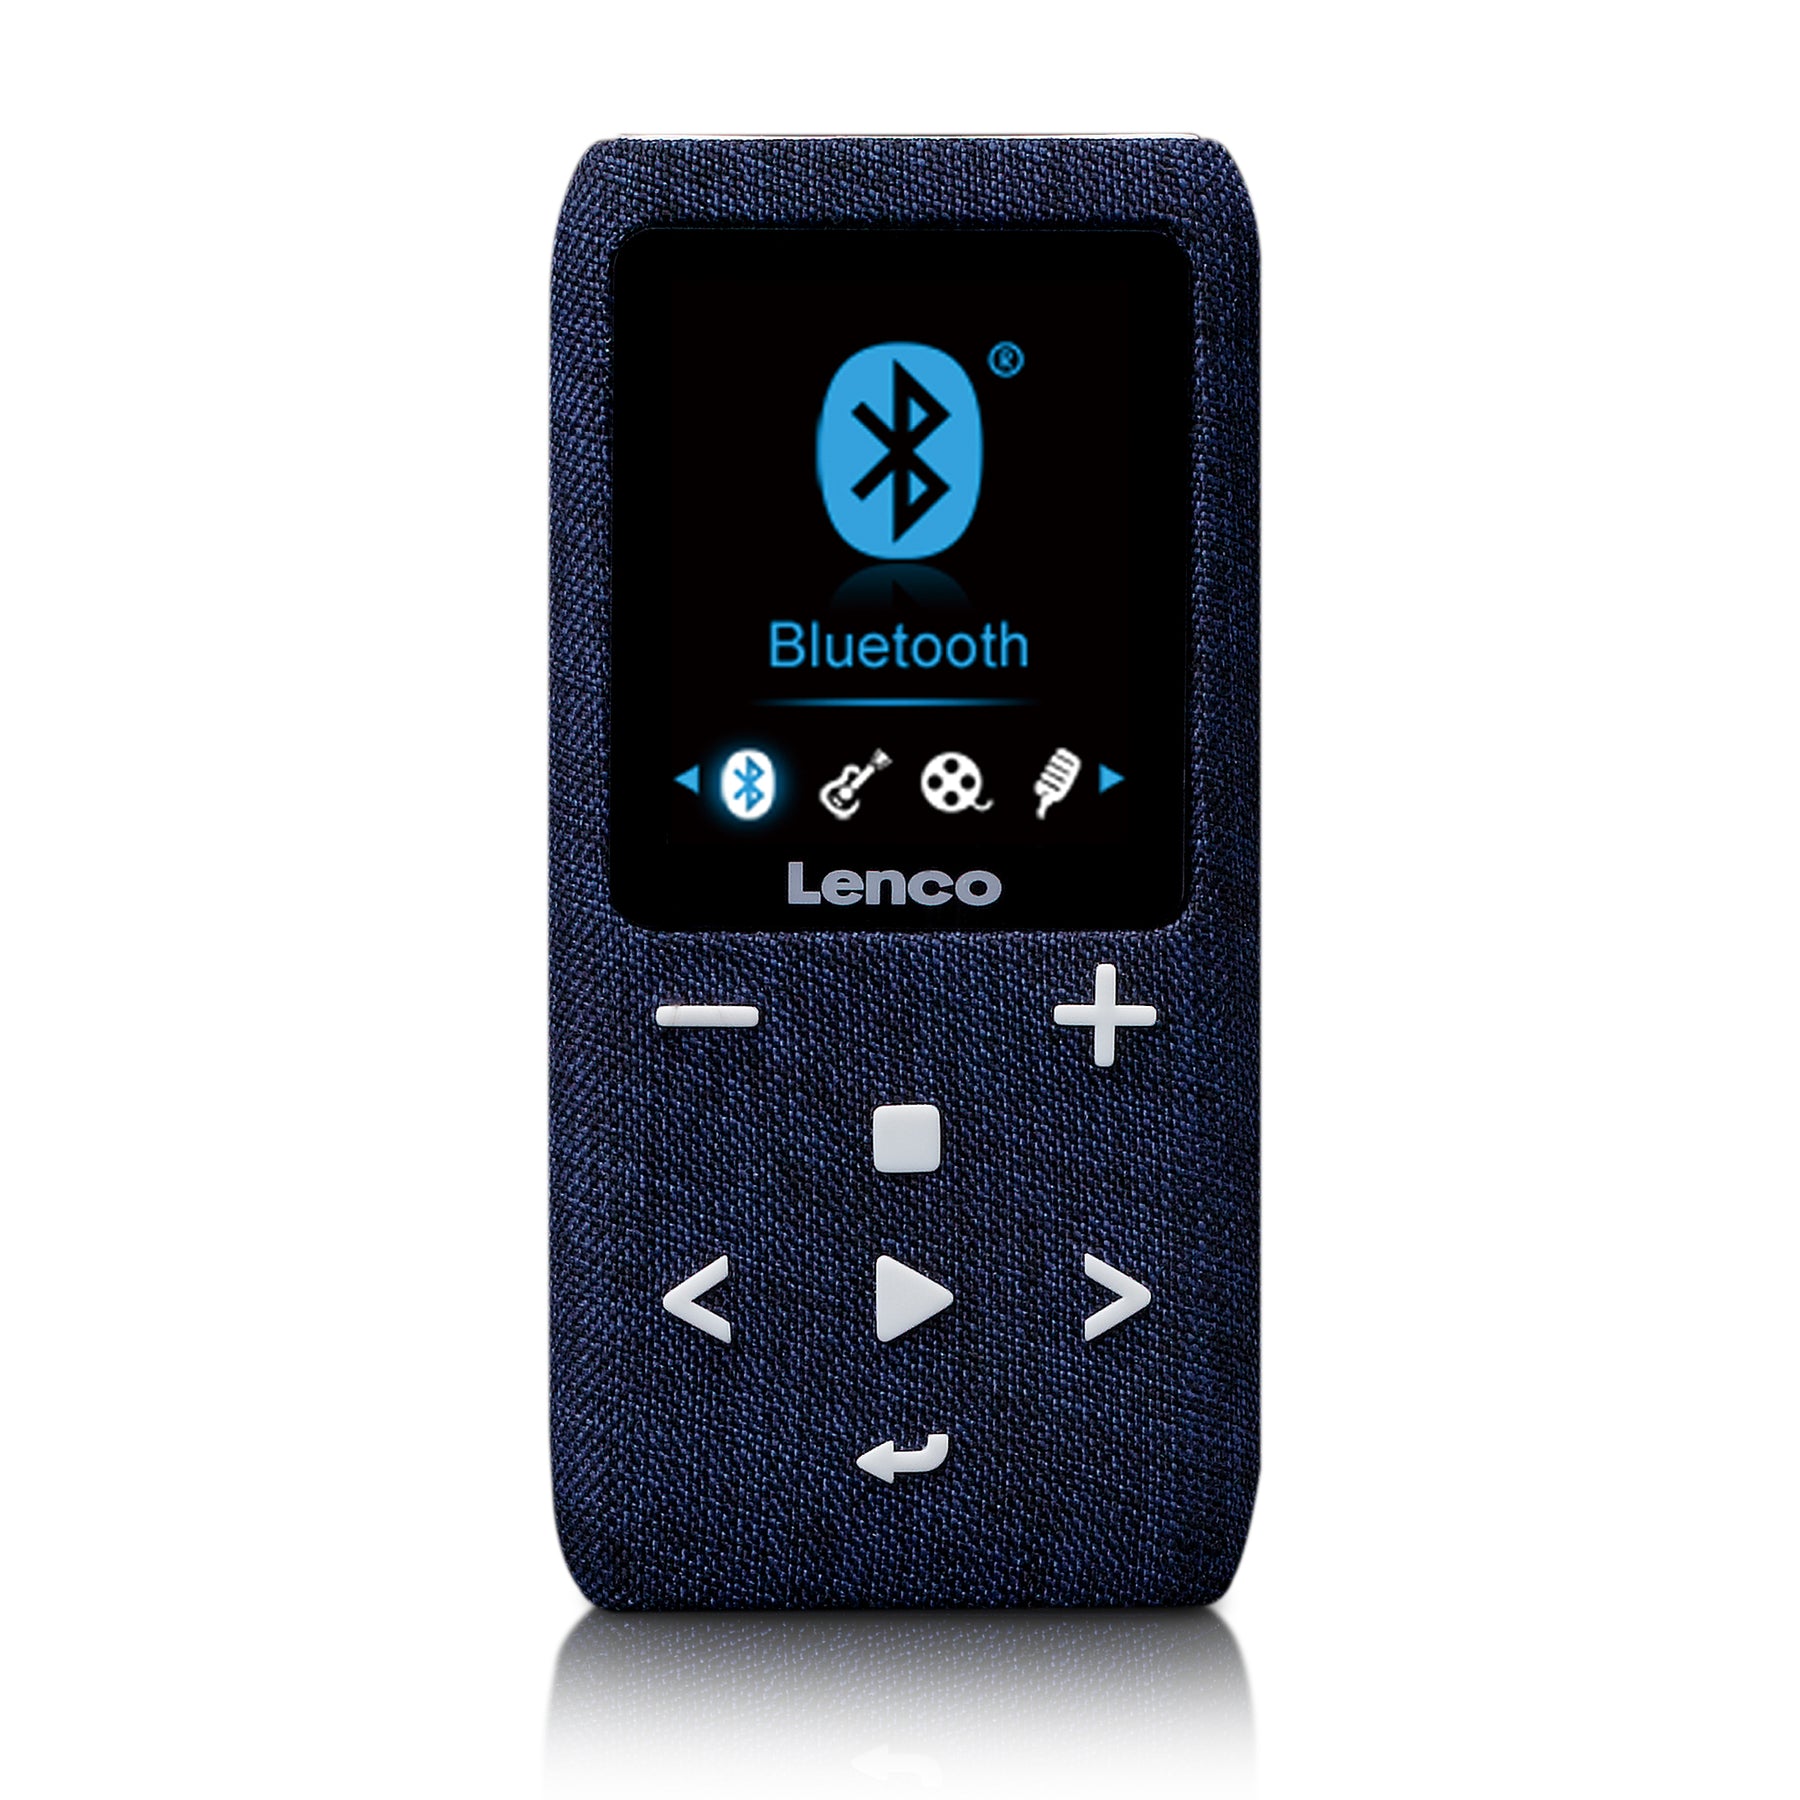 Player Card Bluetooth® XEMIO-861BU - - Micro 8GB LENCO SD MP3/MP4 Blauw met